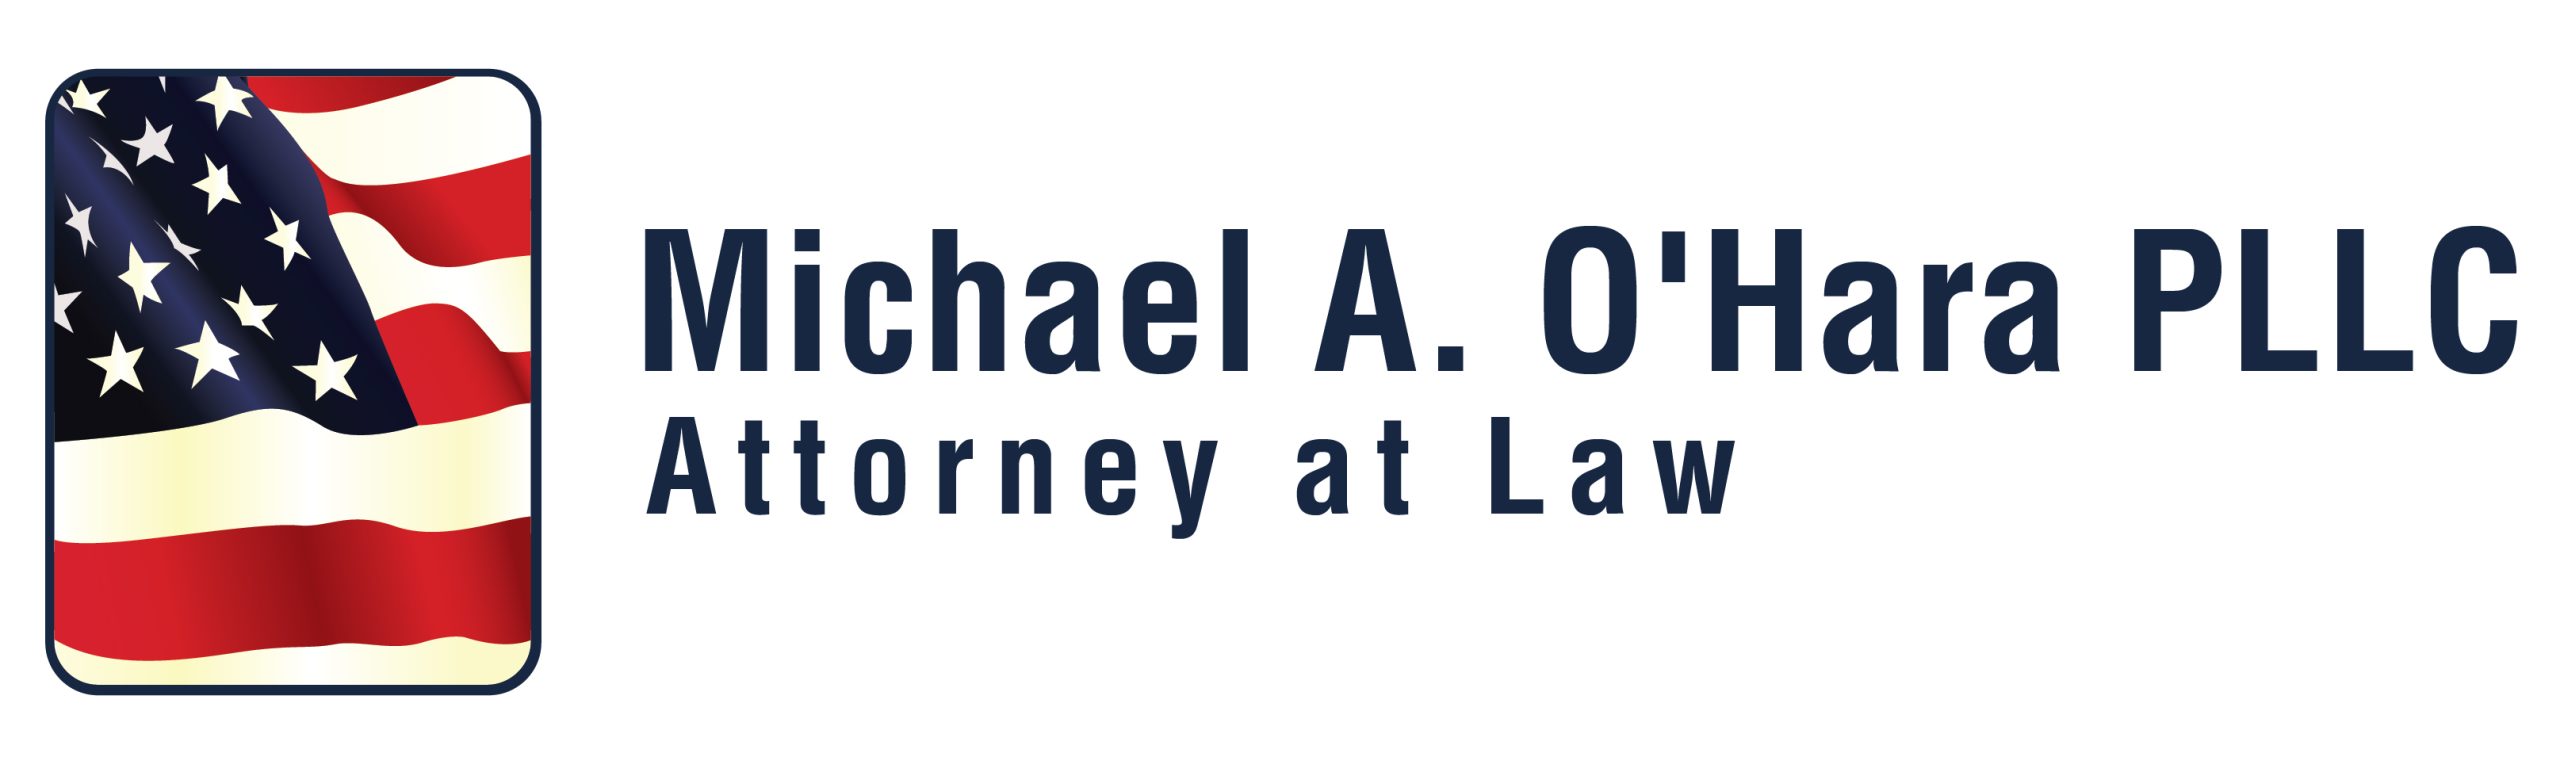 Michael A. O'Hara PLLC, Attorney at Law